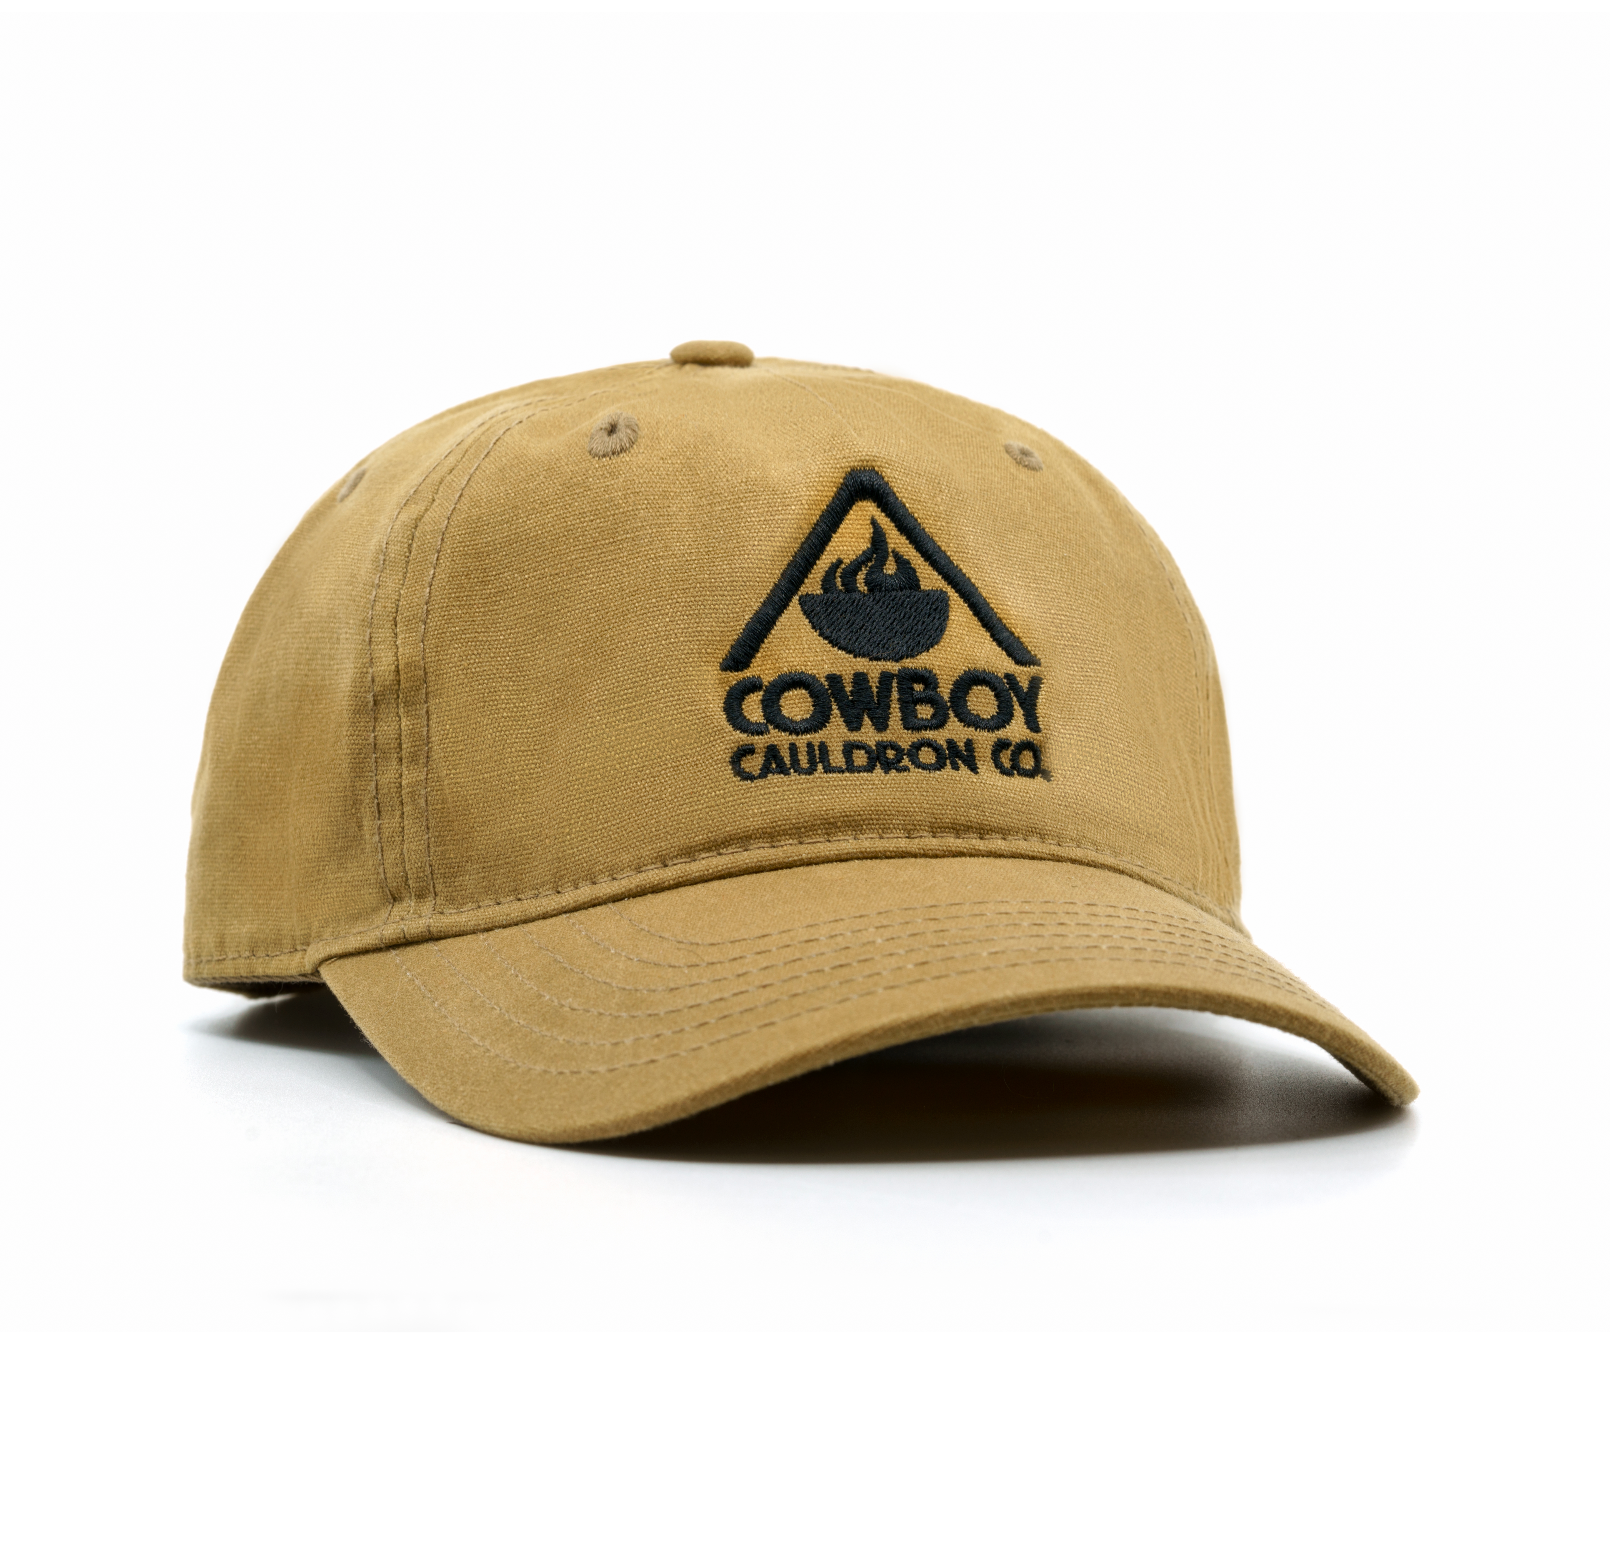 Cowboy Cauldron Co. Baseball Cap